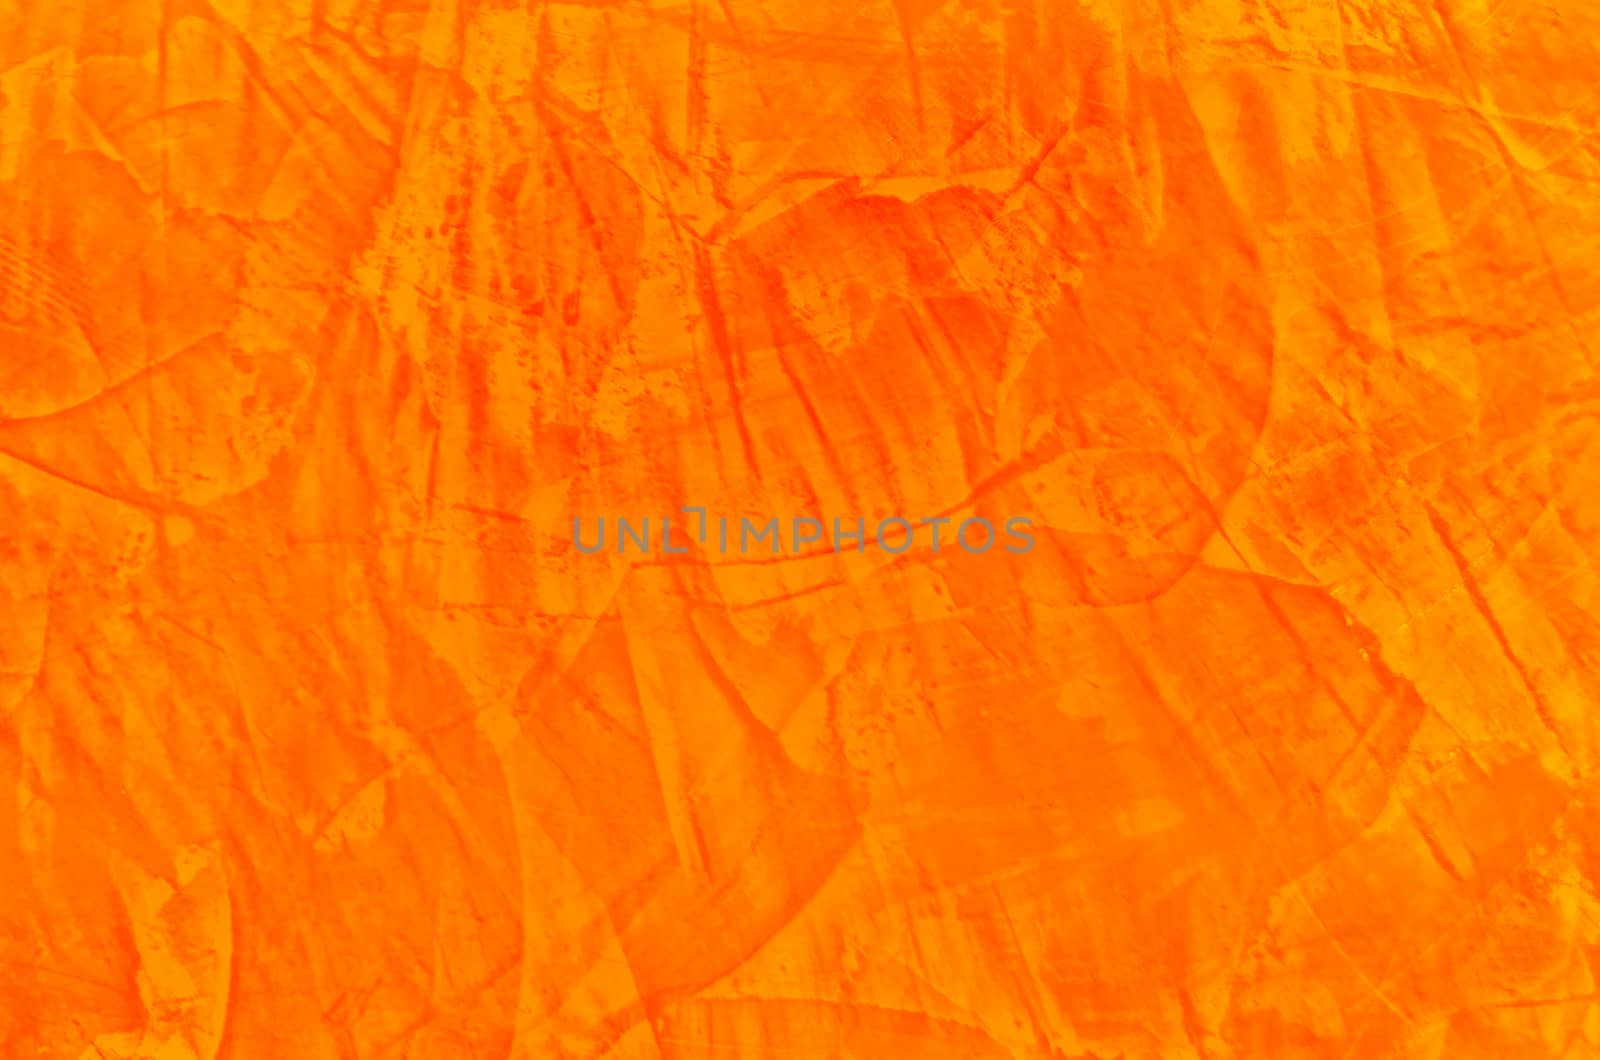 Orange background image horizontally with textured effect.